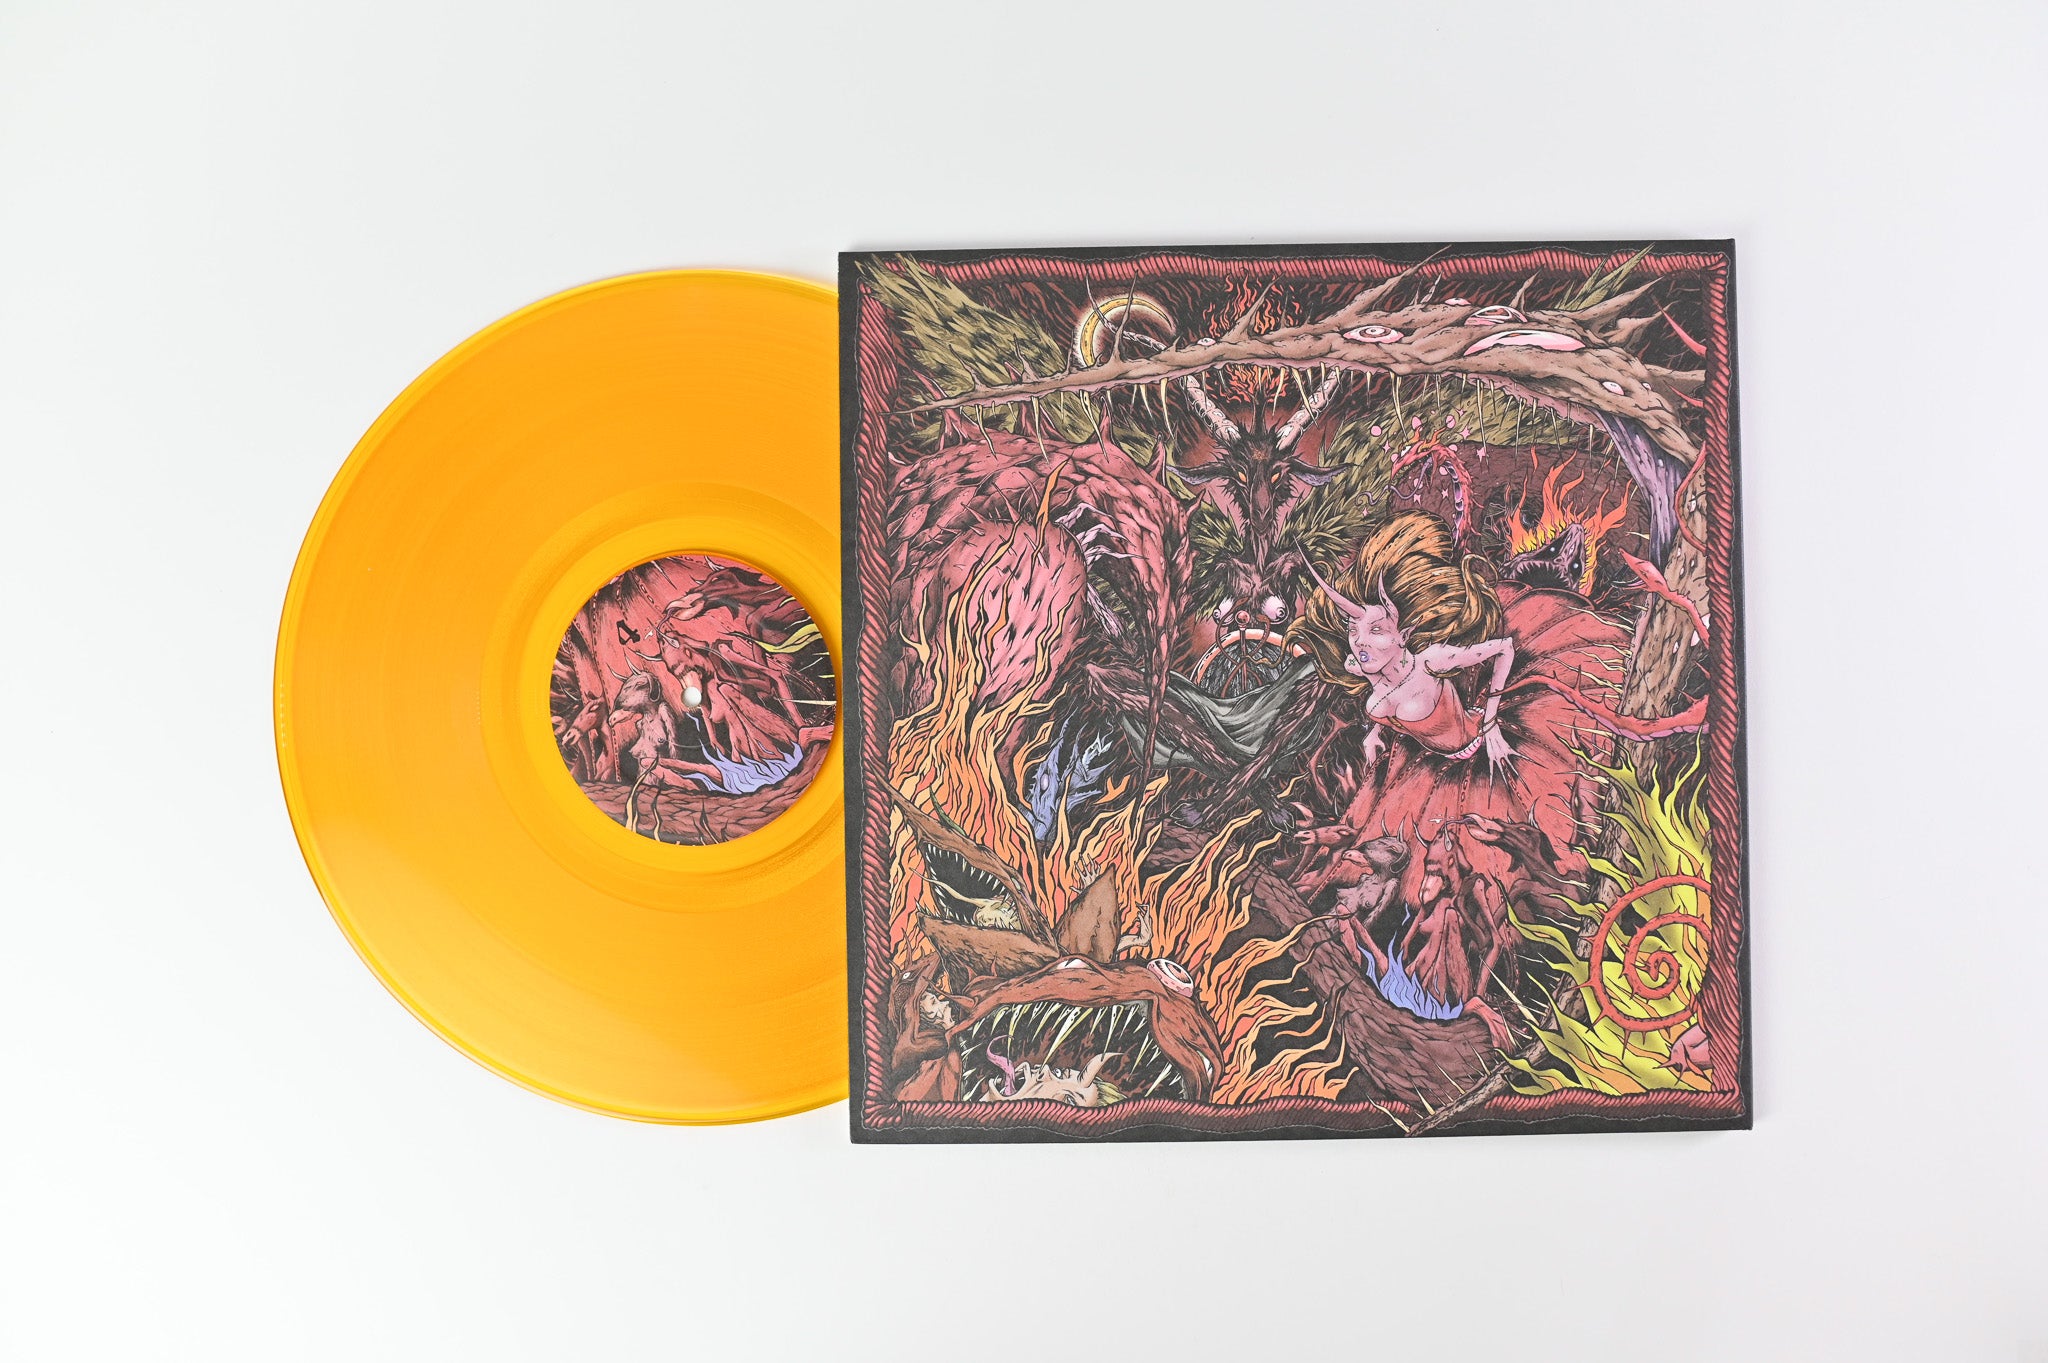 Bongripper - Satan Worshipping Doom Limited Orange Translucent Reissue